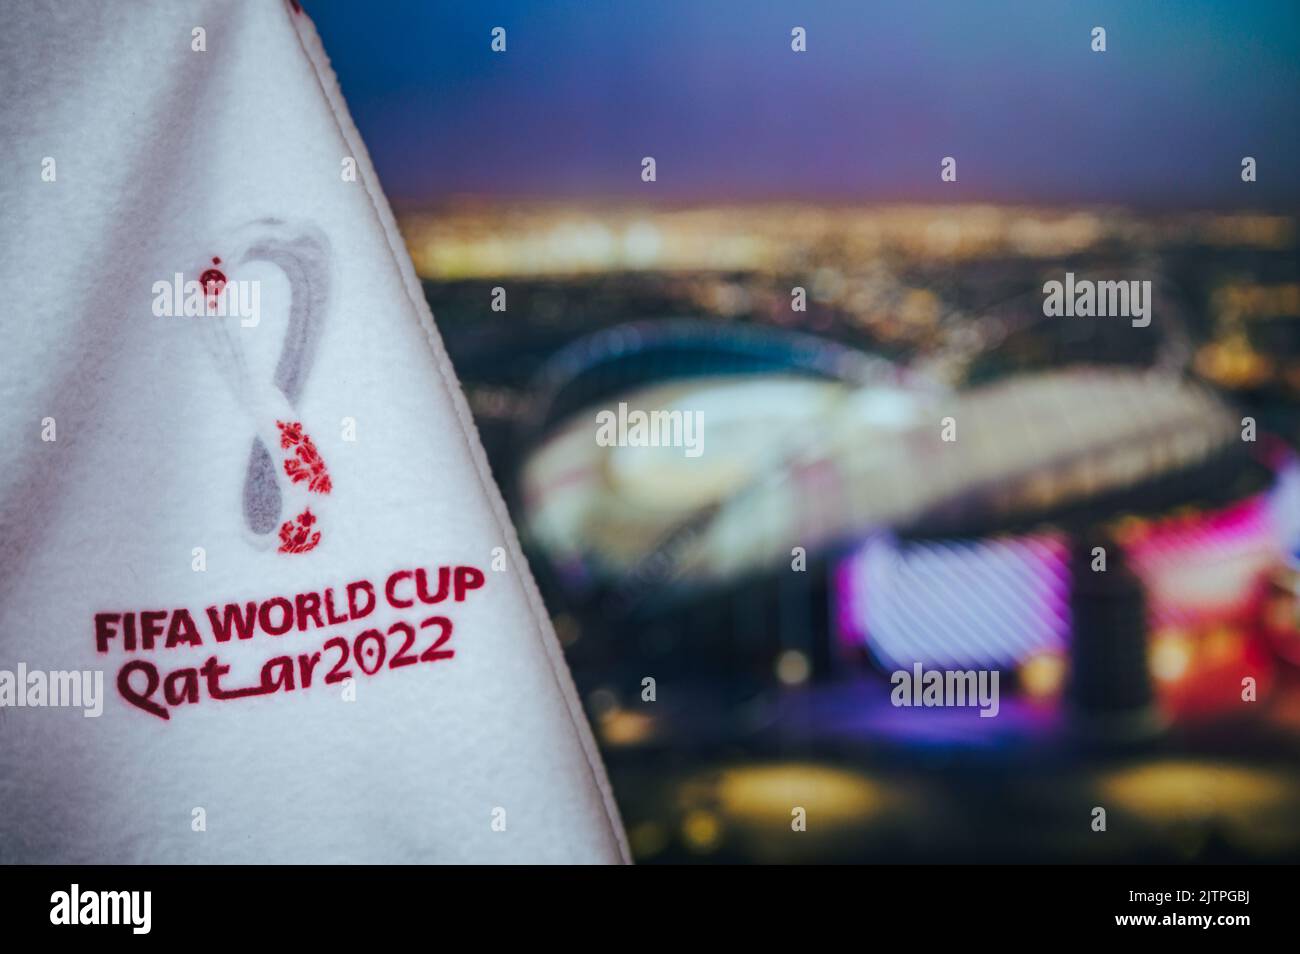 DOHA, QATAR, AUGUST 30, 2022: Fifa world Cup 2022 in Qatar. Football World Championship official logo on white blanket.Soccer Khalifa International St Stock Photo